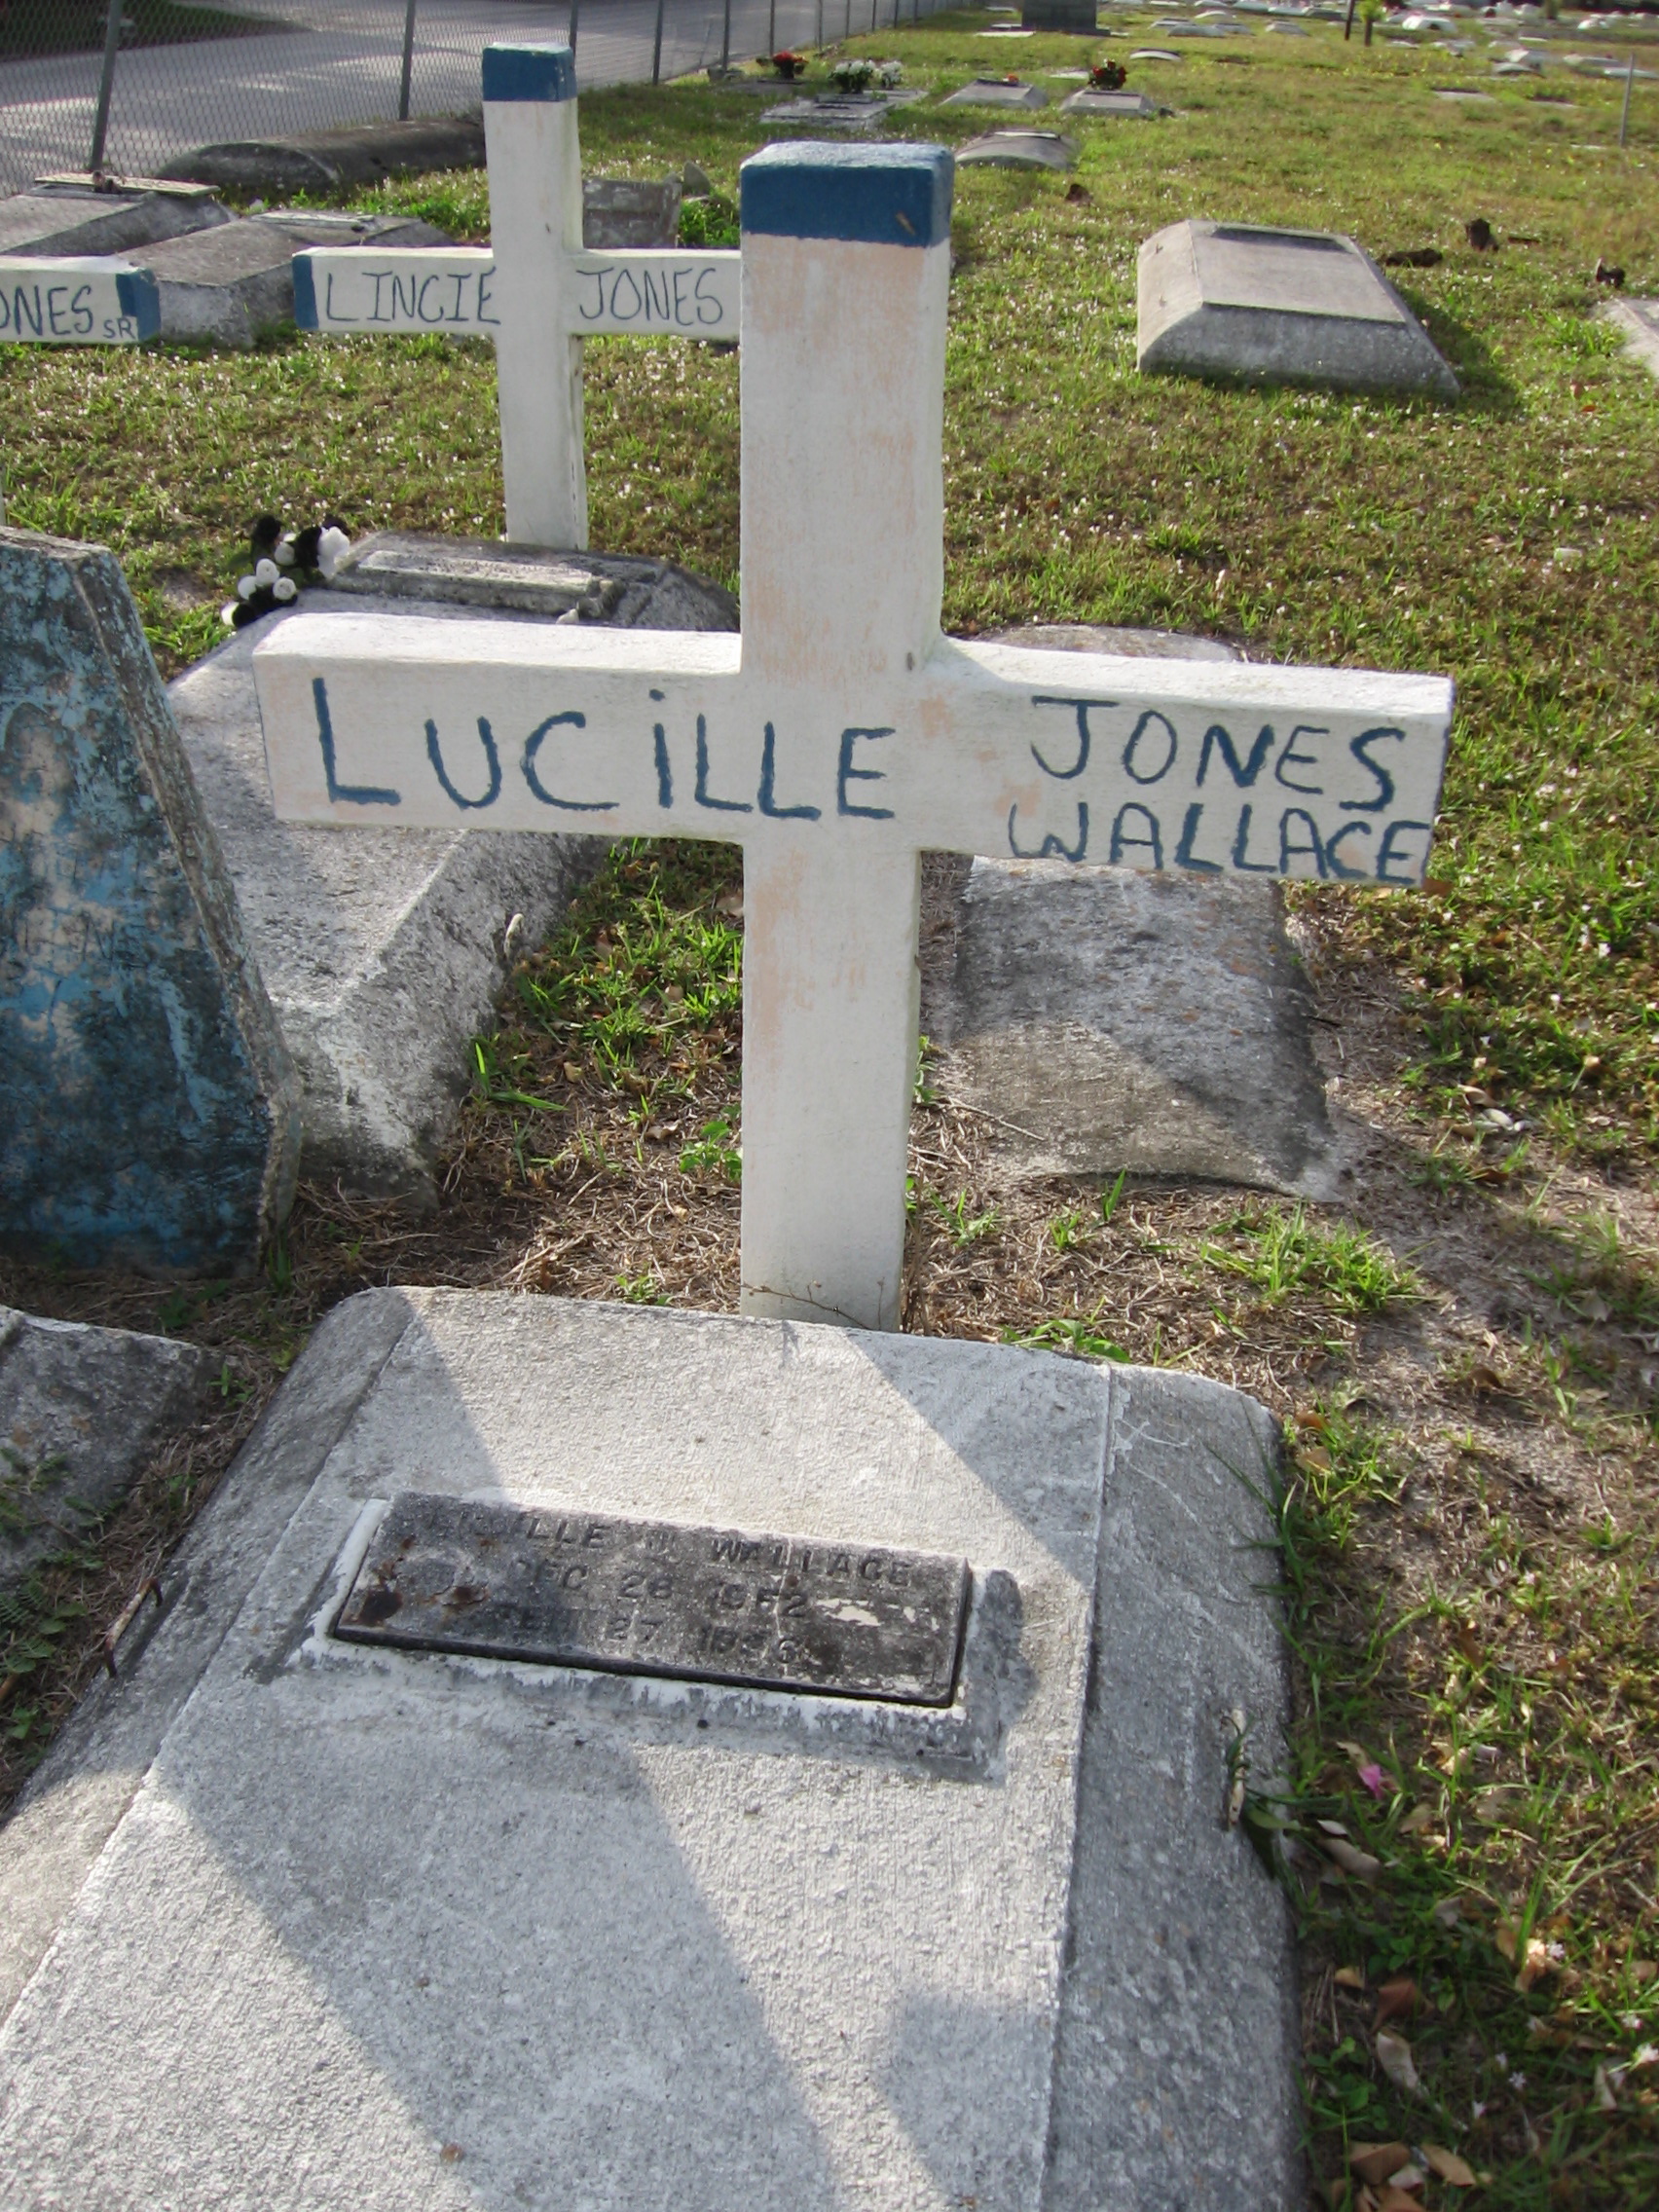 Lucille Jones Wallace